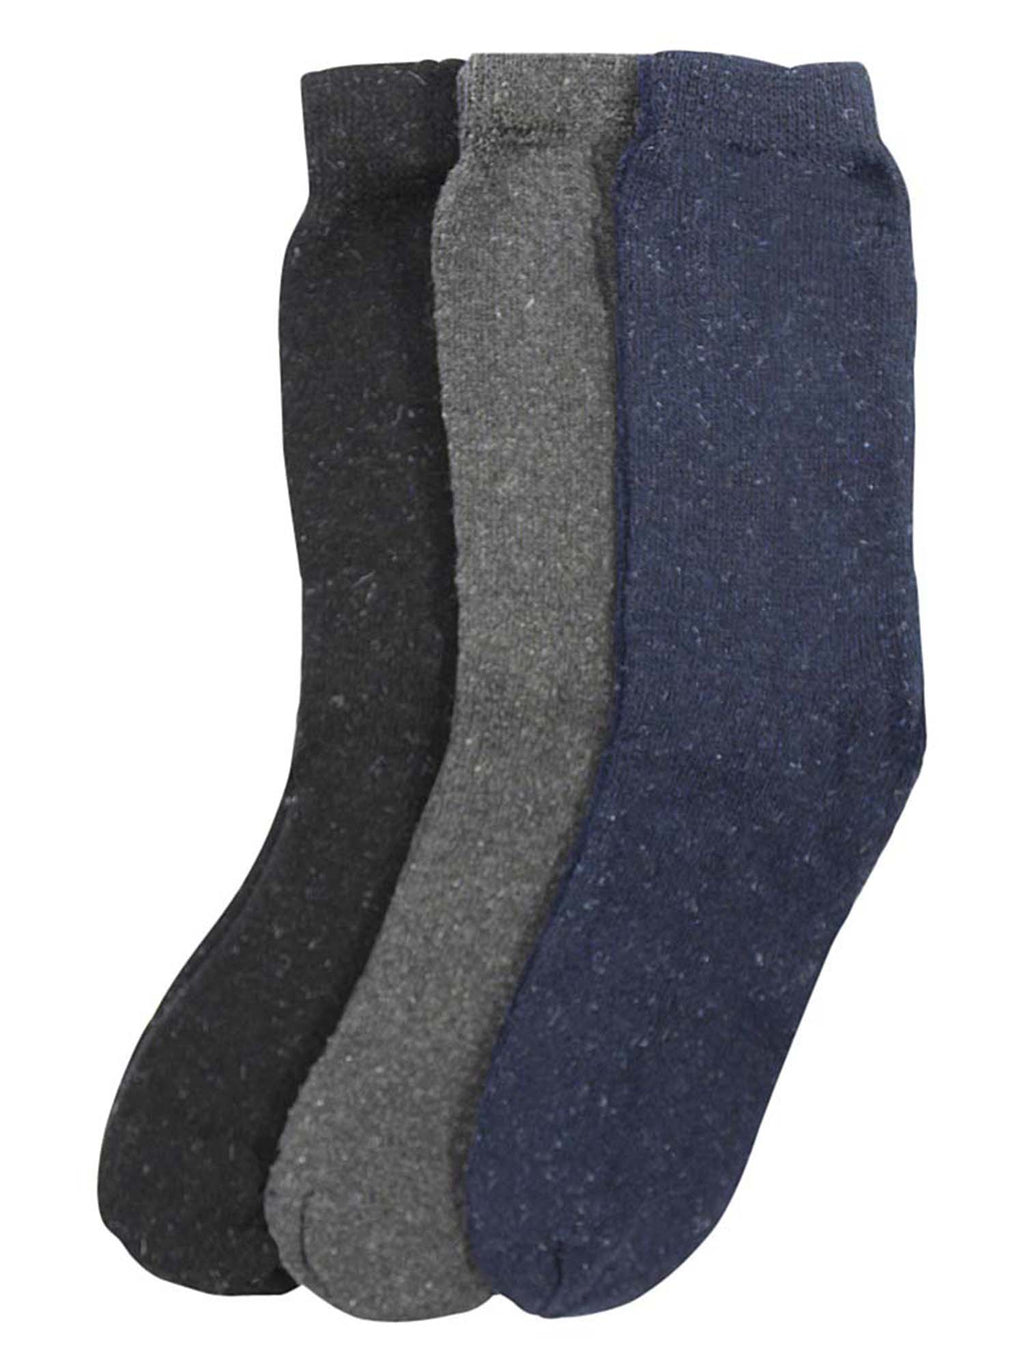 Navy Blue Black & Charcoal Mens Thermal 3 Pack Socks